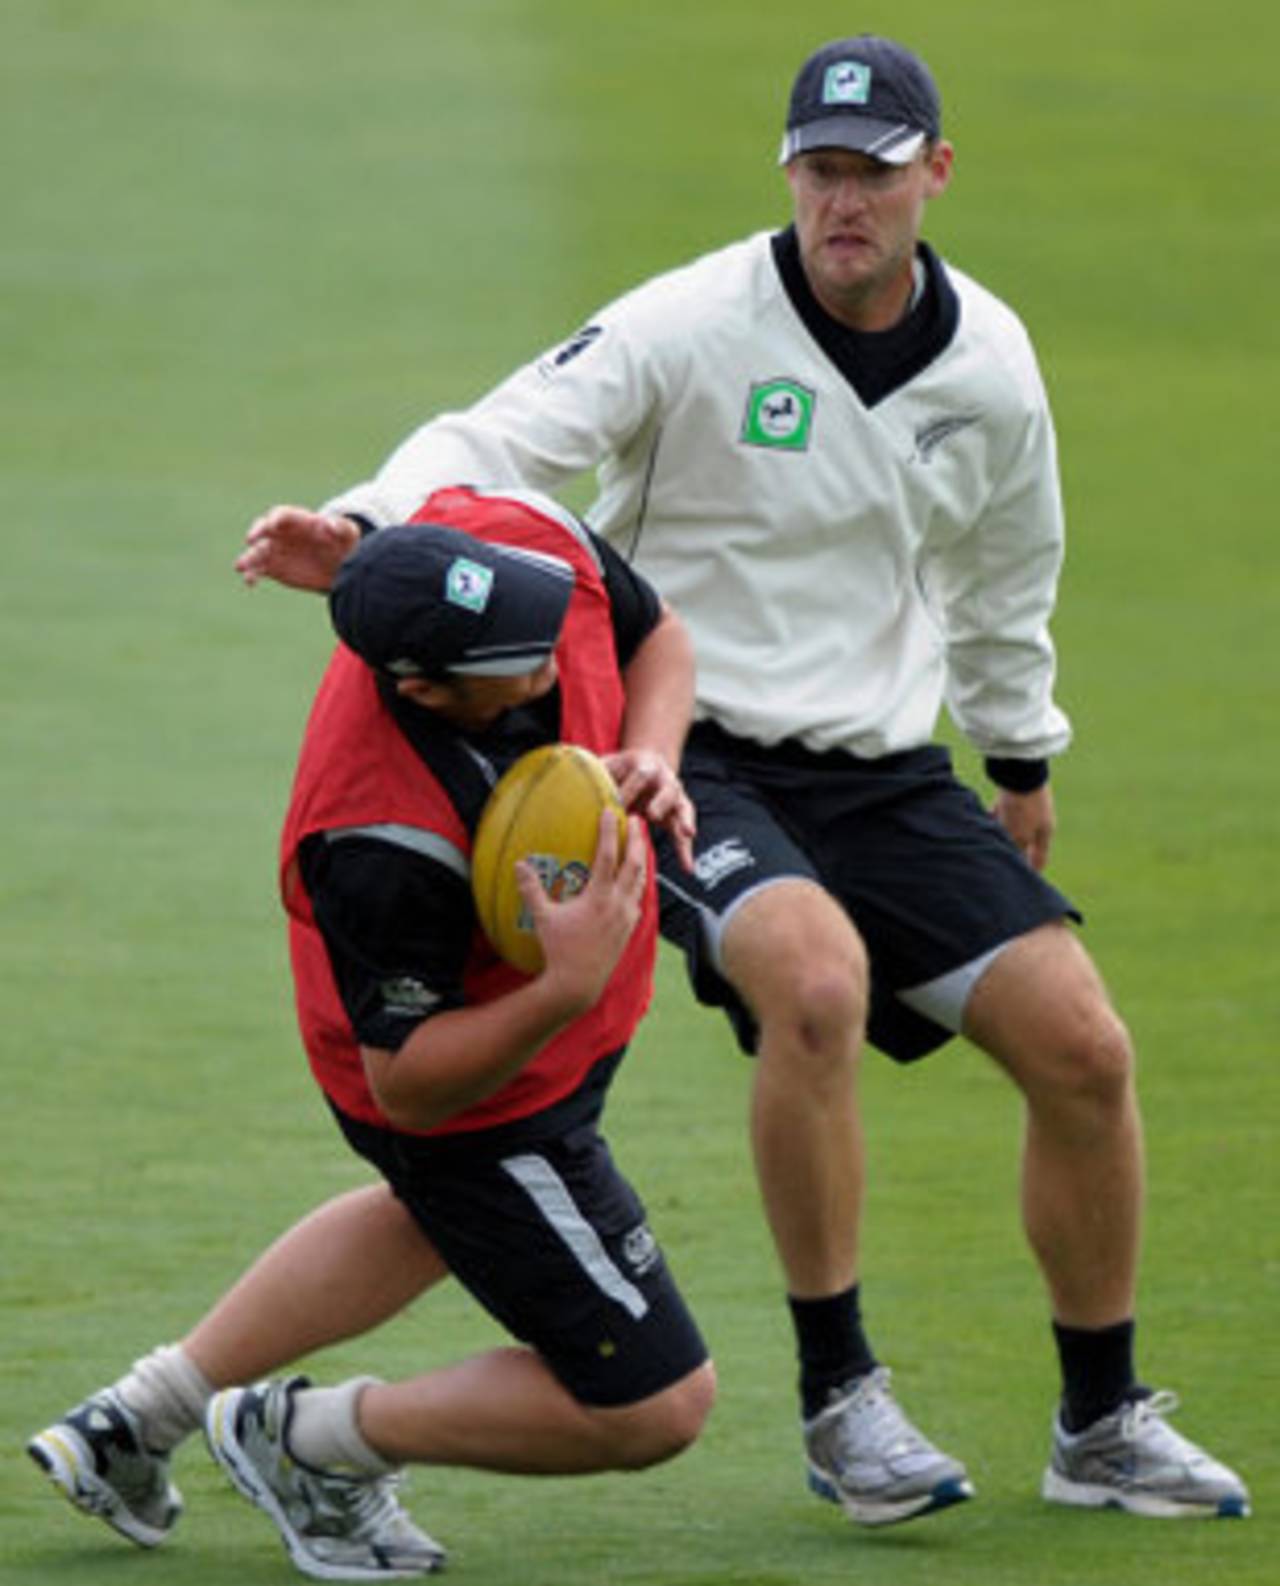 You can't get past me: Daniel Vettori tackles Jesse Ryder, Wellington, April 1, 2009